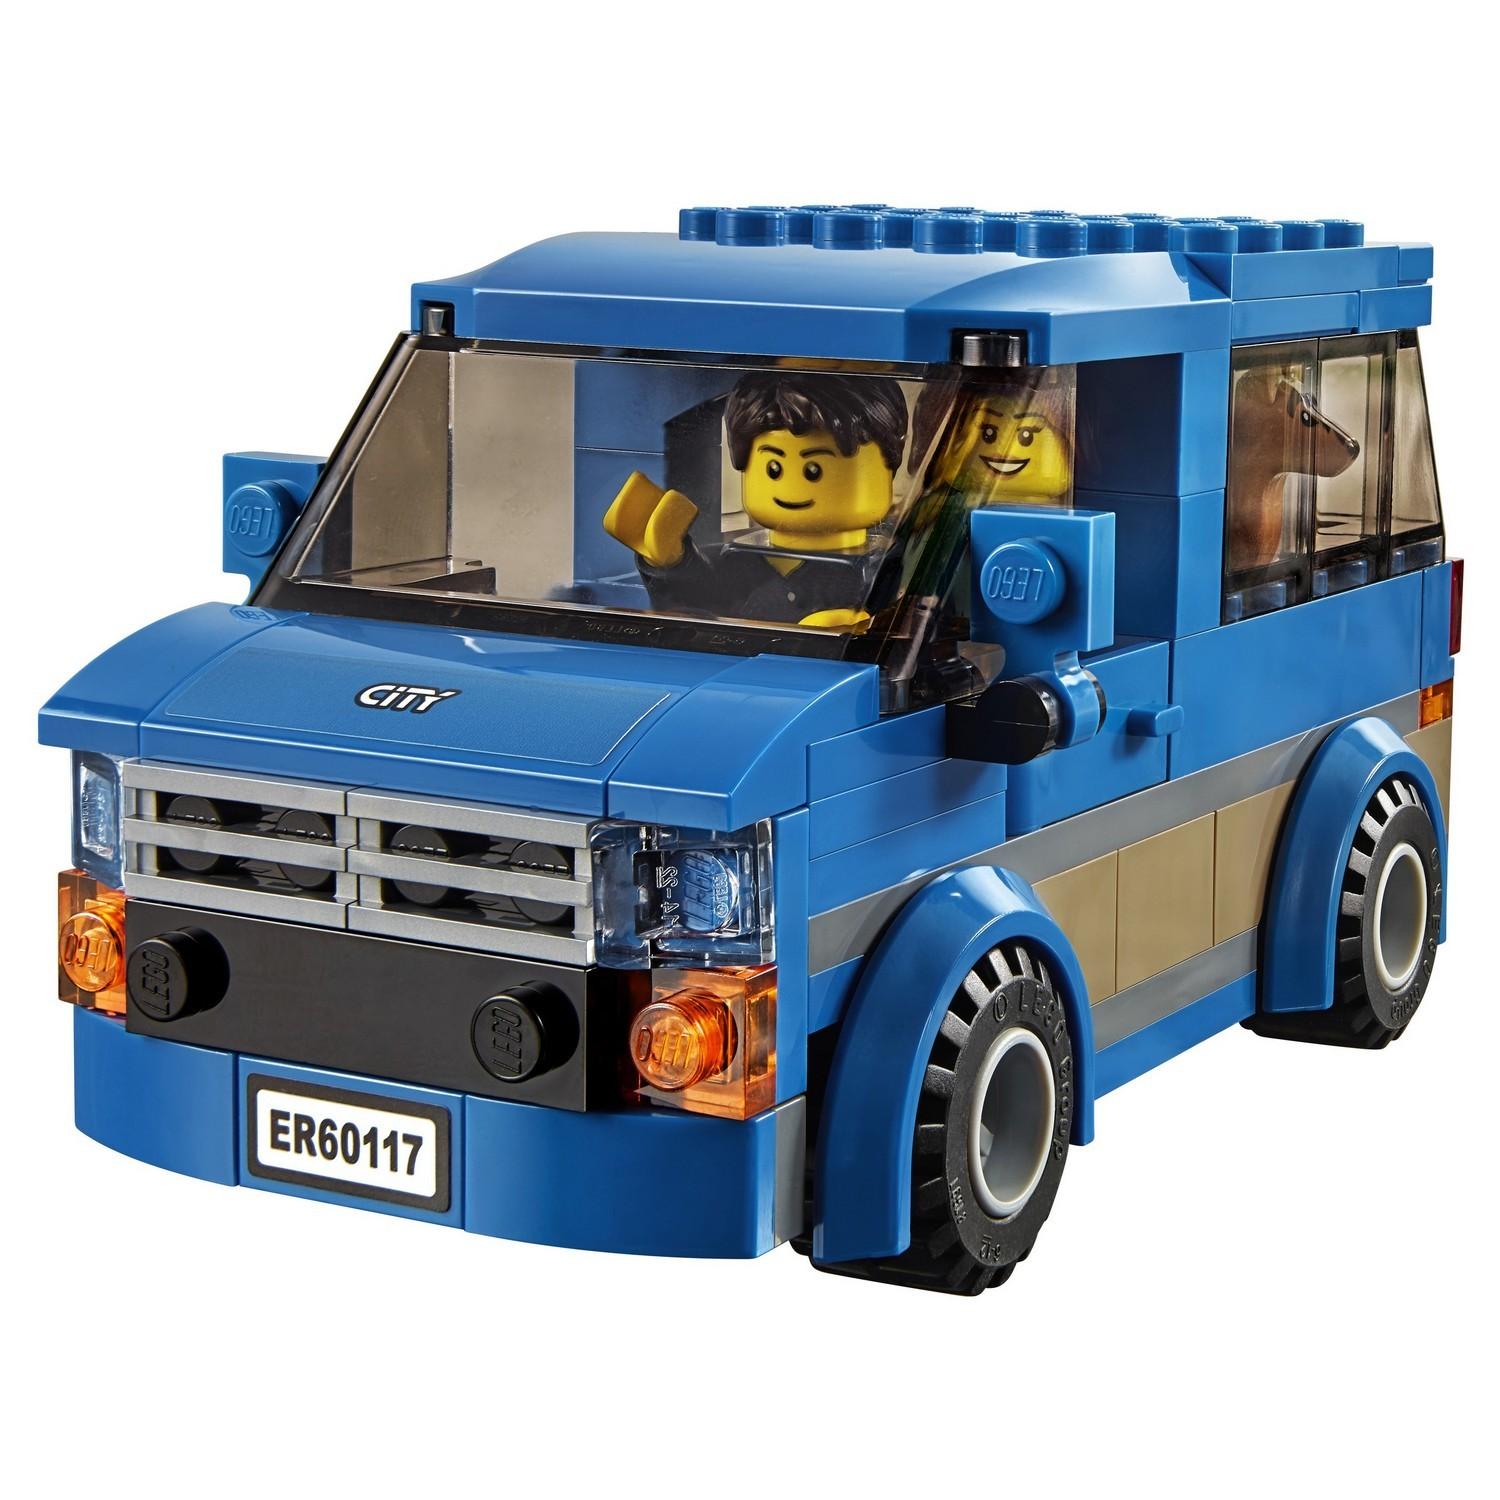 Lego City 60117 Фургон и дом на колёсах